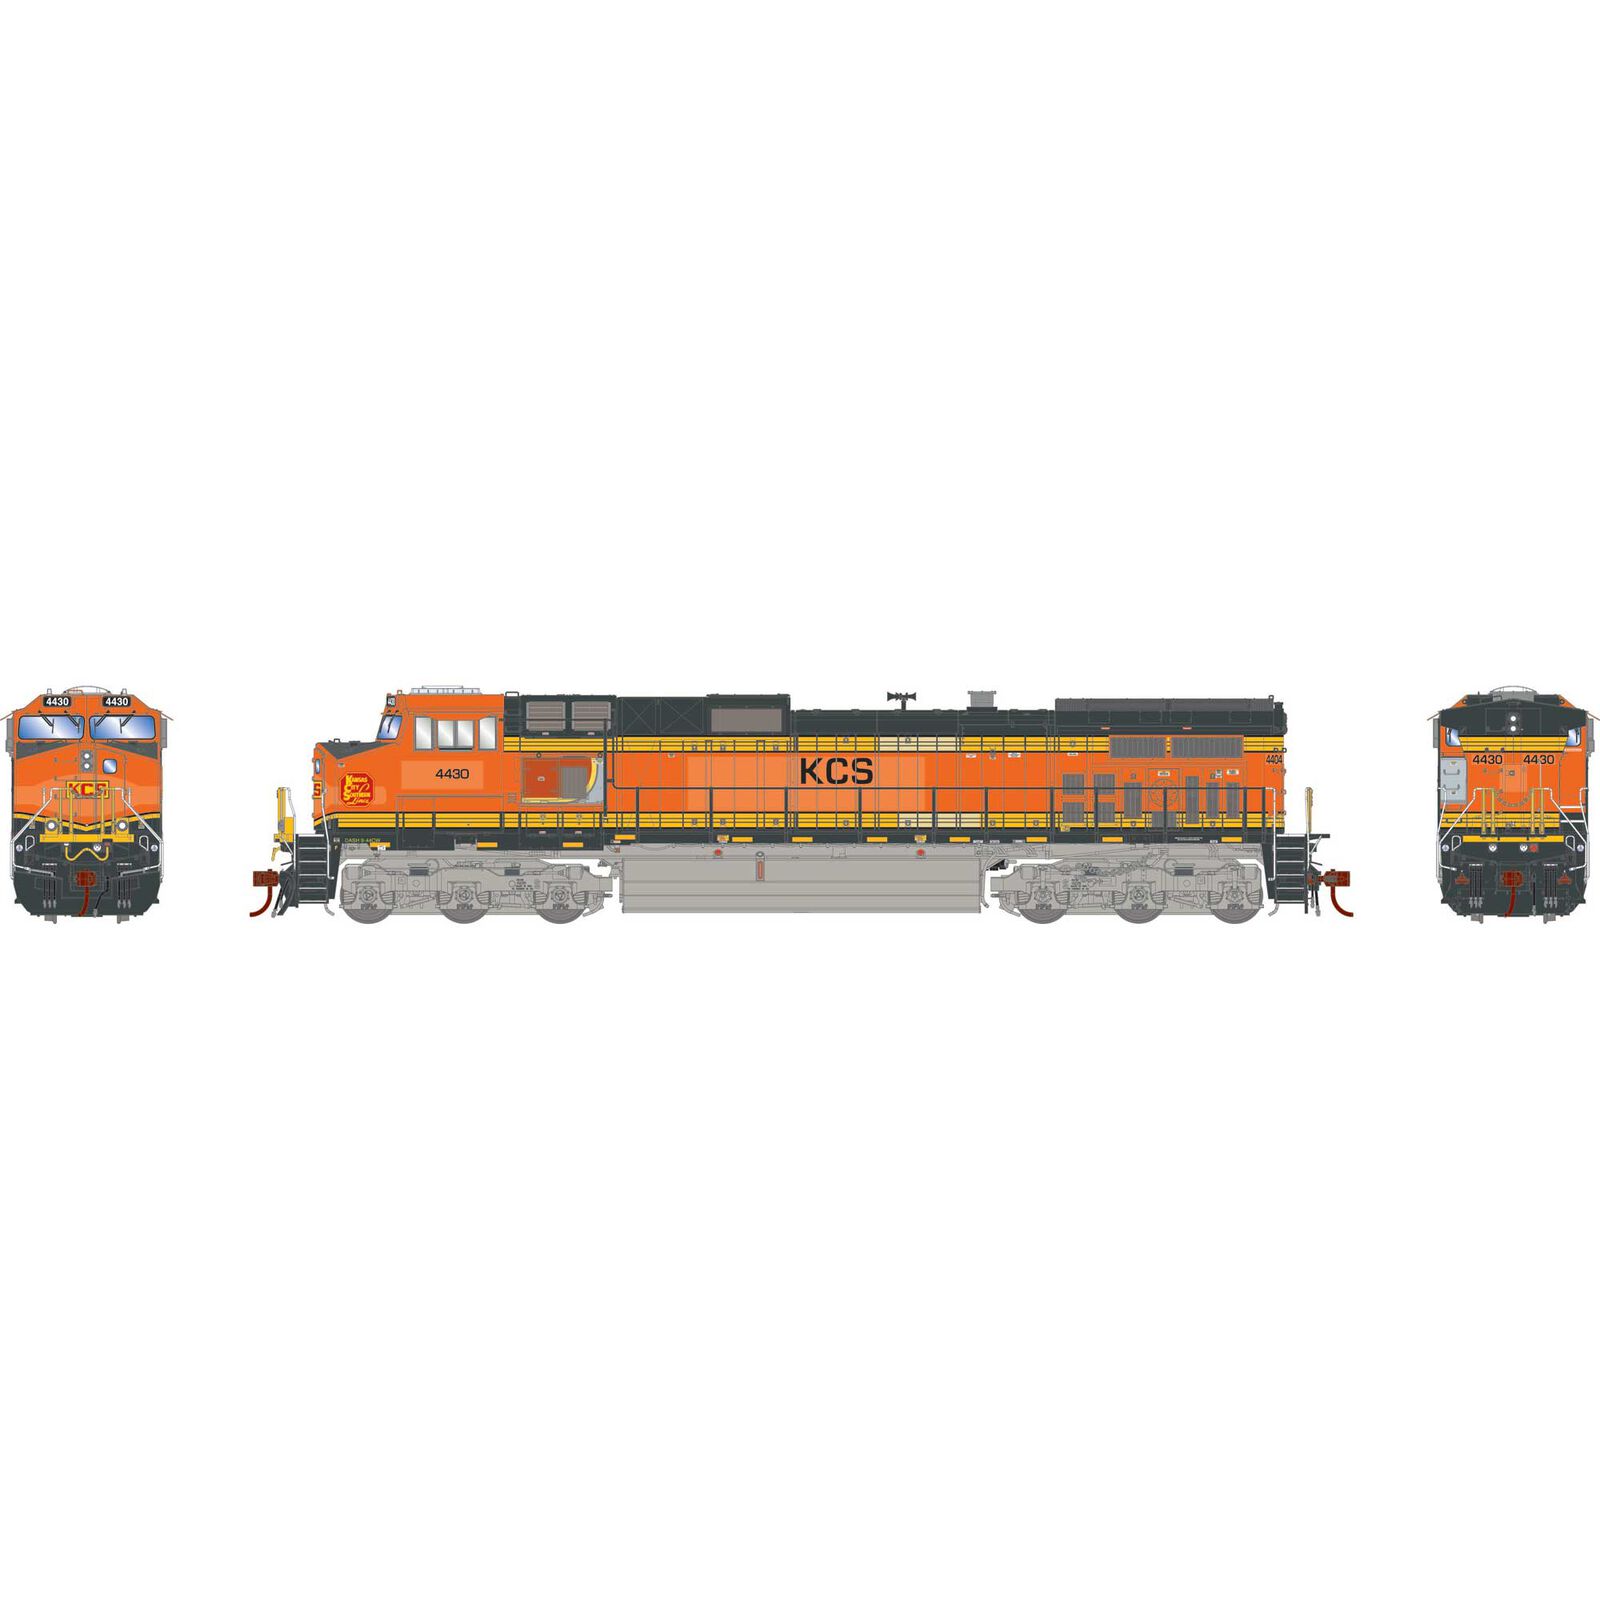 HO Dash 9-44CW Locomotive, KCS #4430